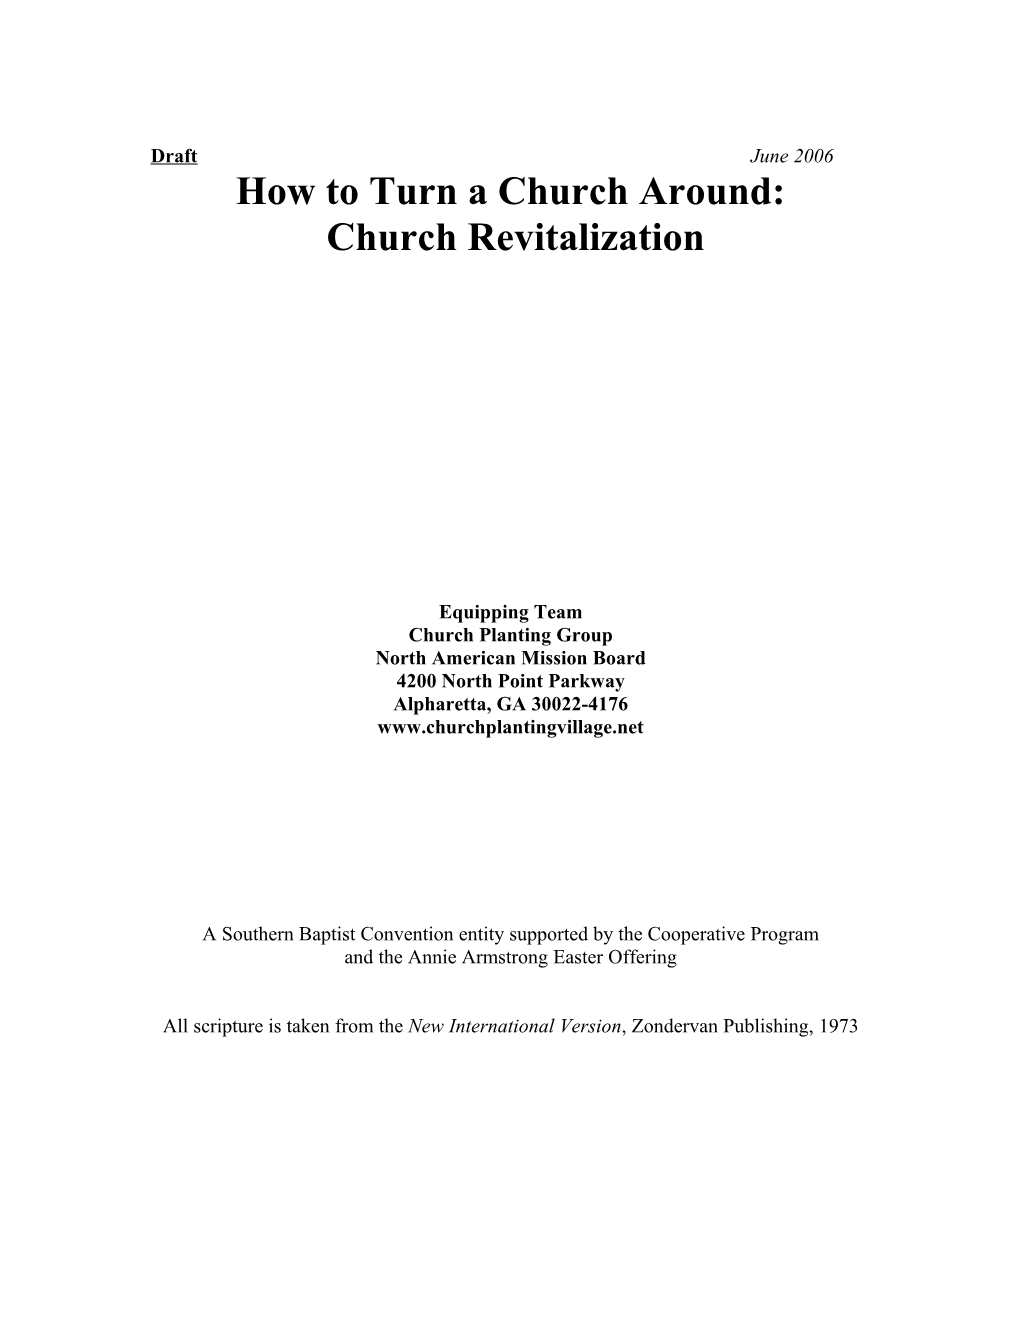 How to Turn a Church Around